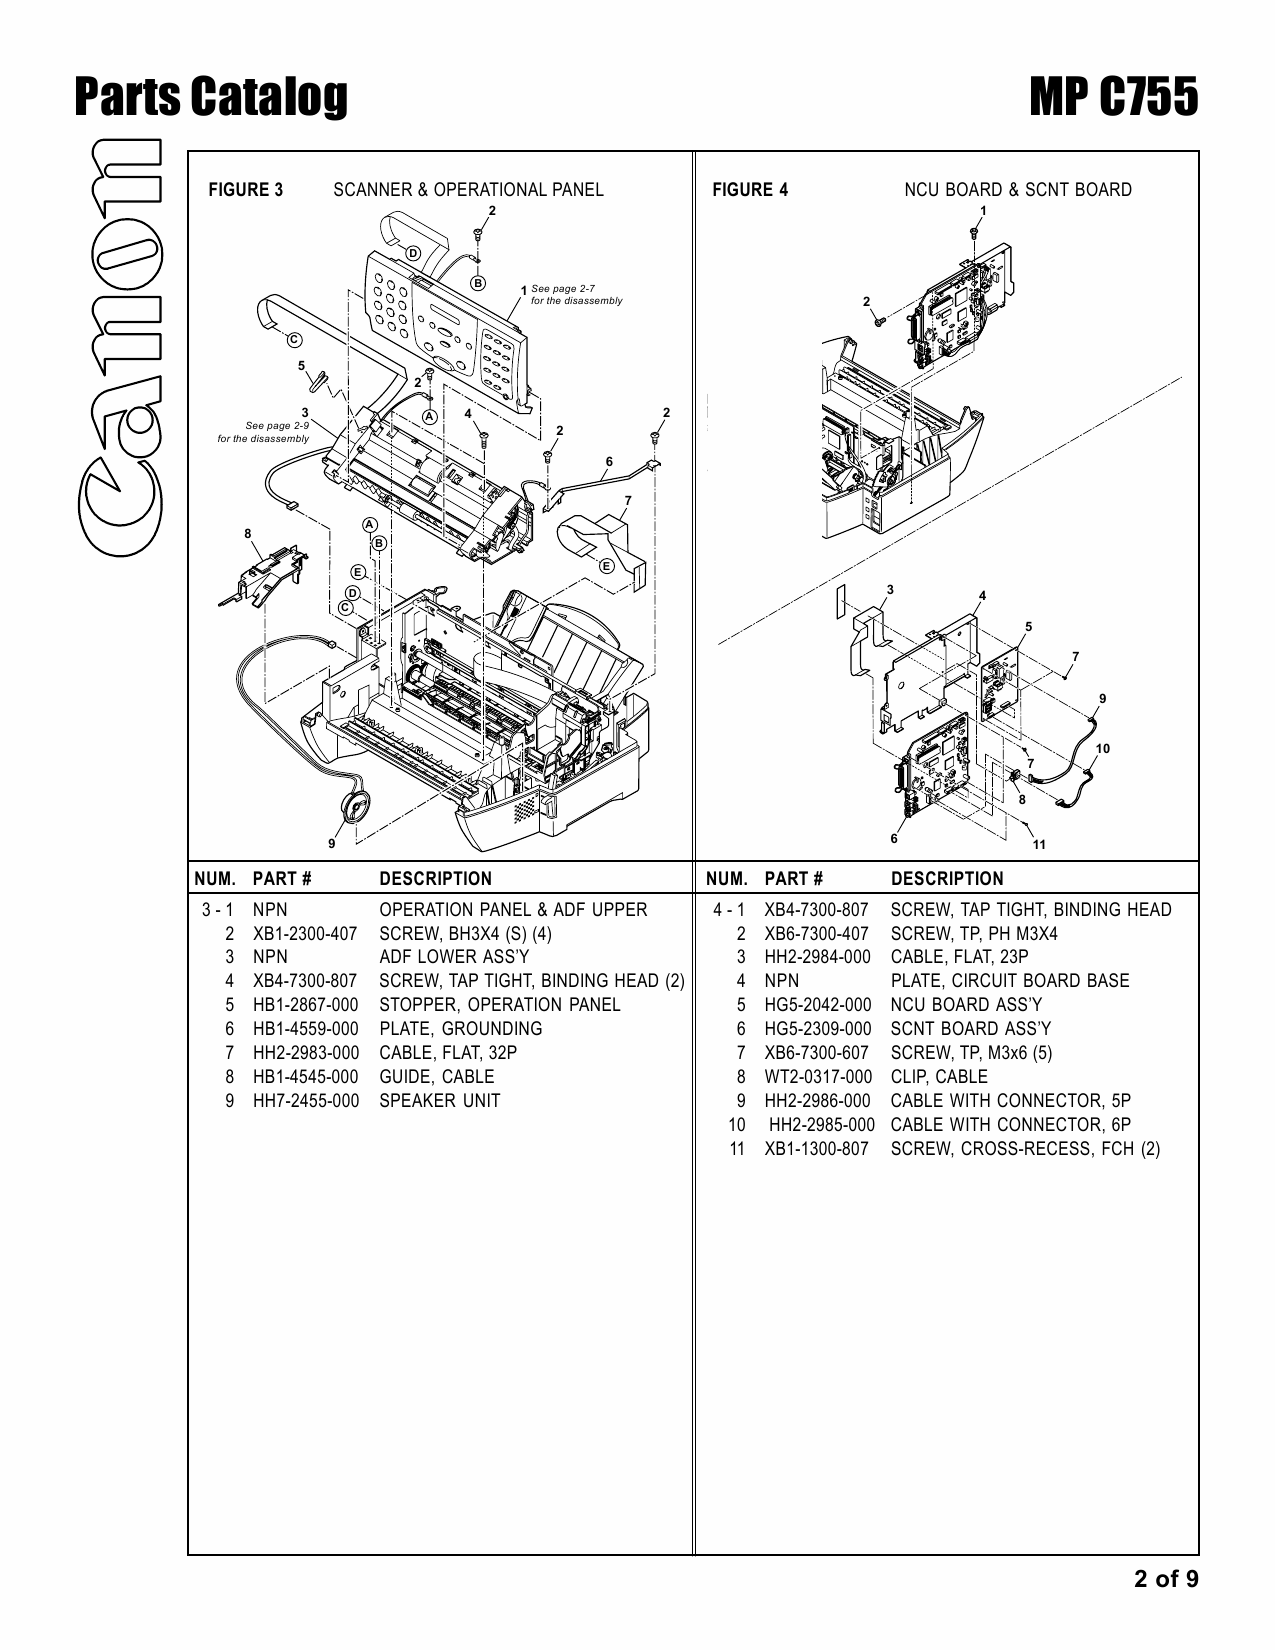 Canon MultiPASS MP-C755 Parts Catalog Manual-2